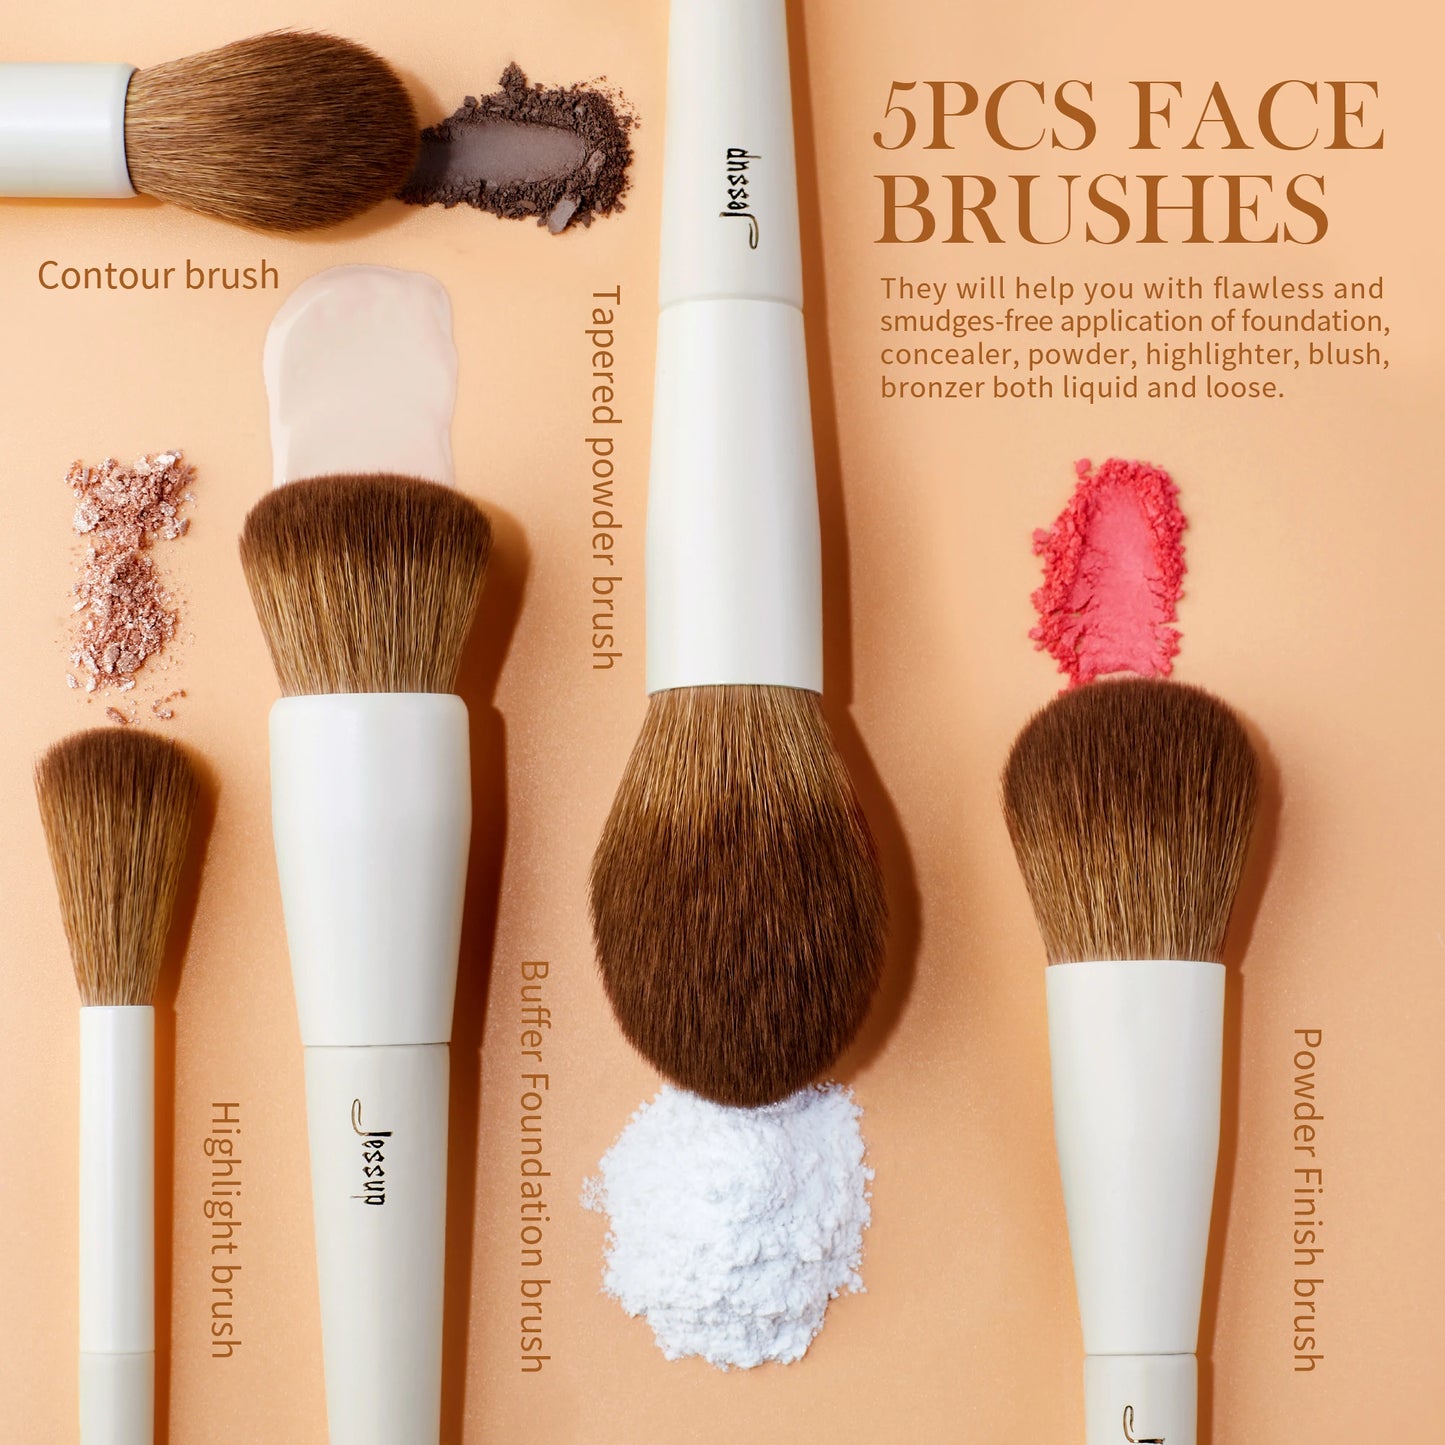 Jessup Face Brushes set 5Pcs Makeup Brushes Vegan Foundation Blush Bronzer Brush Contour Fluffy Setting Powder, Light Grey T493 - TotallyVeG